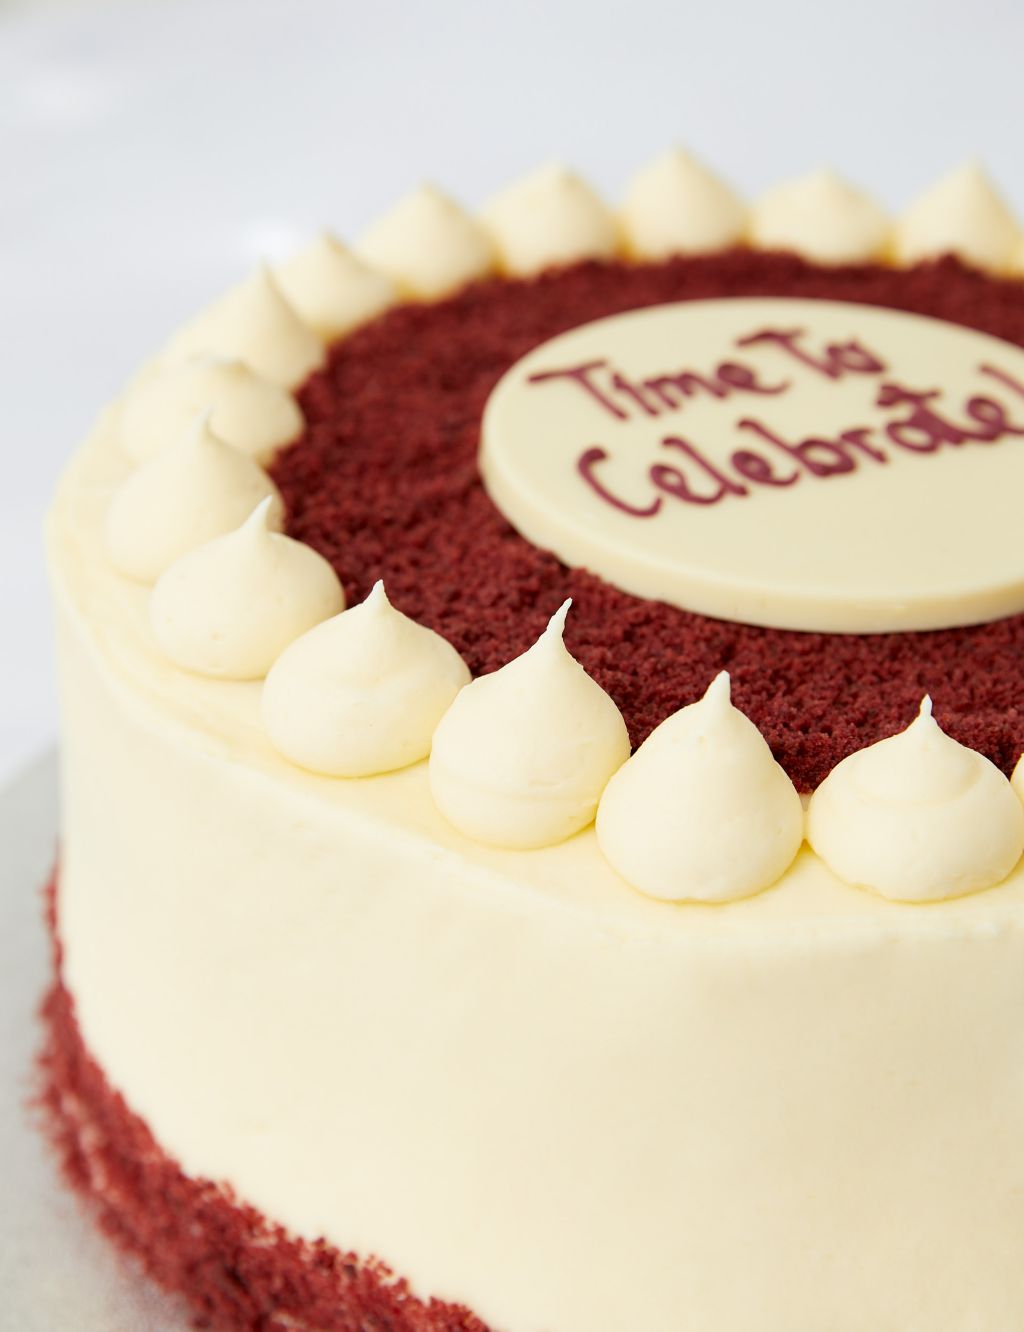 Personalised Extra Large Red Velvet Cake (Serves 24) 5 of 6